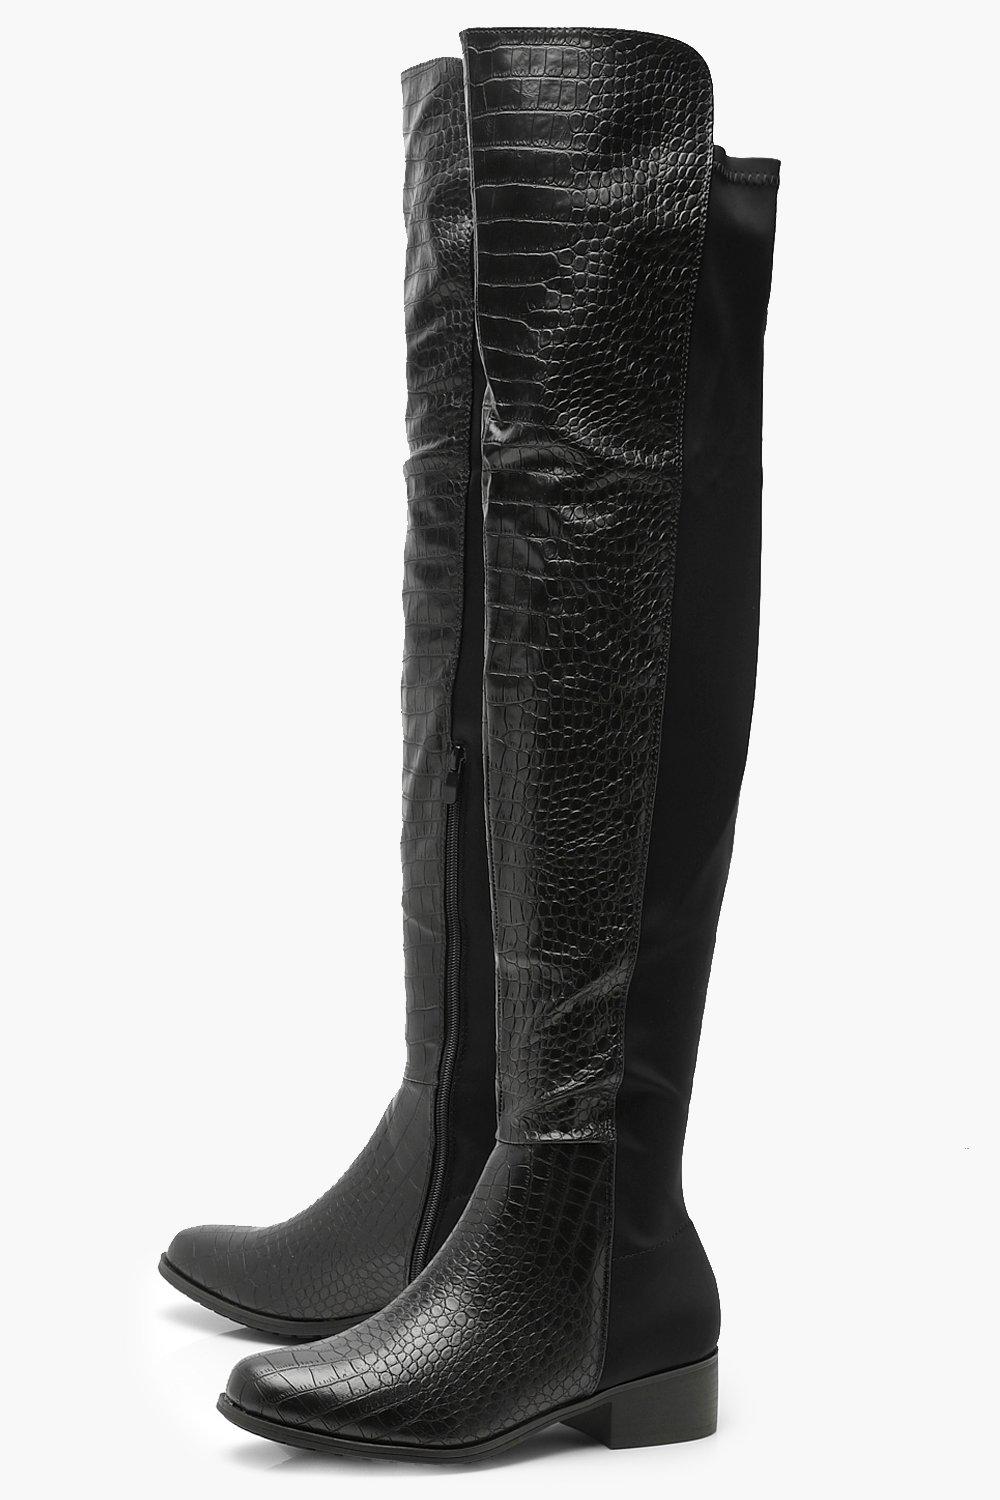 croc knee high boots